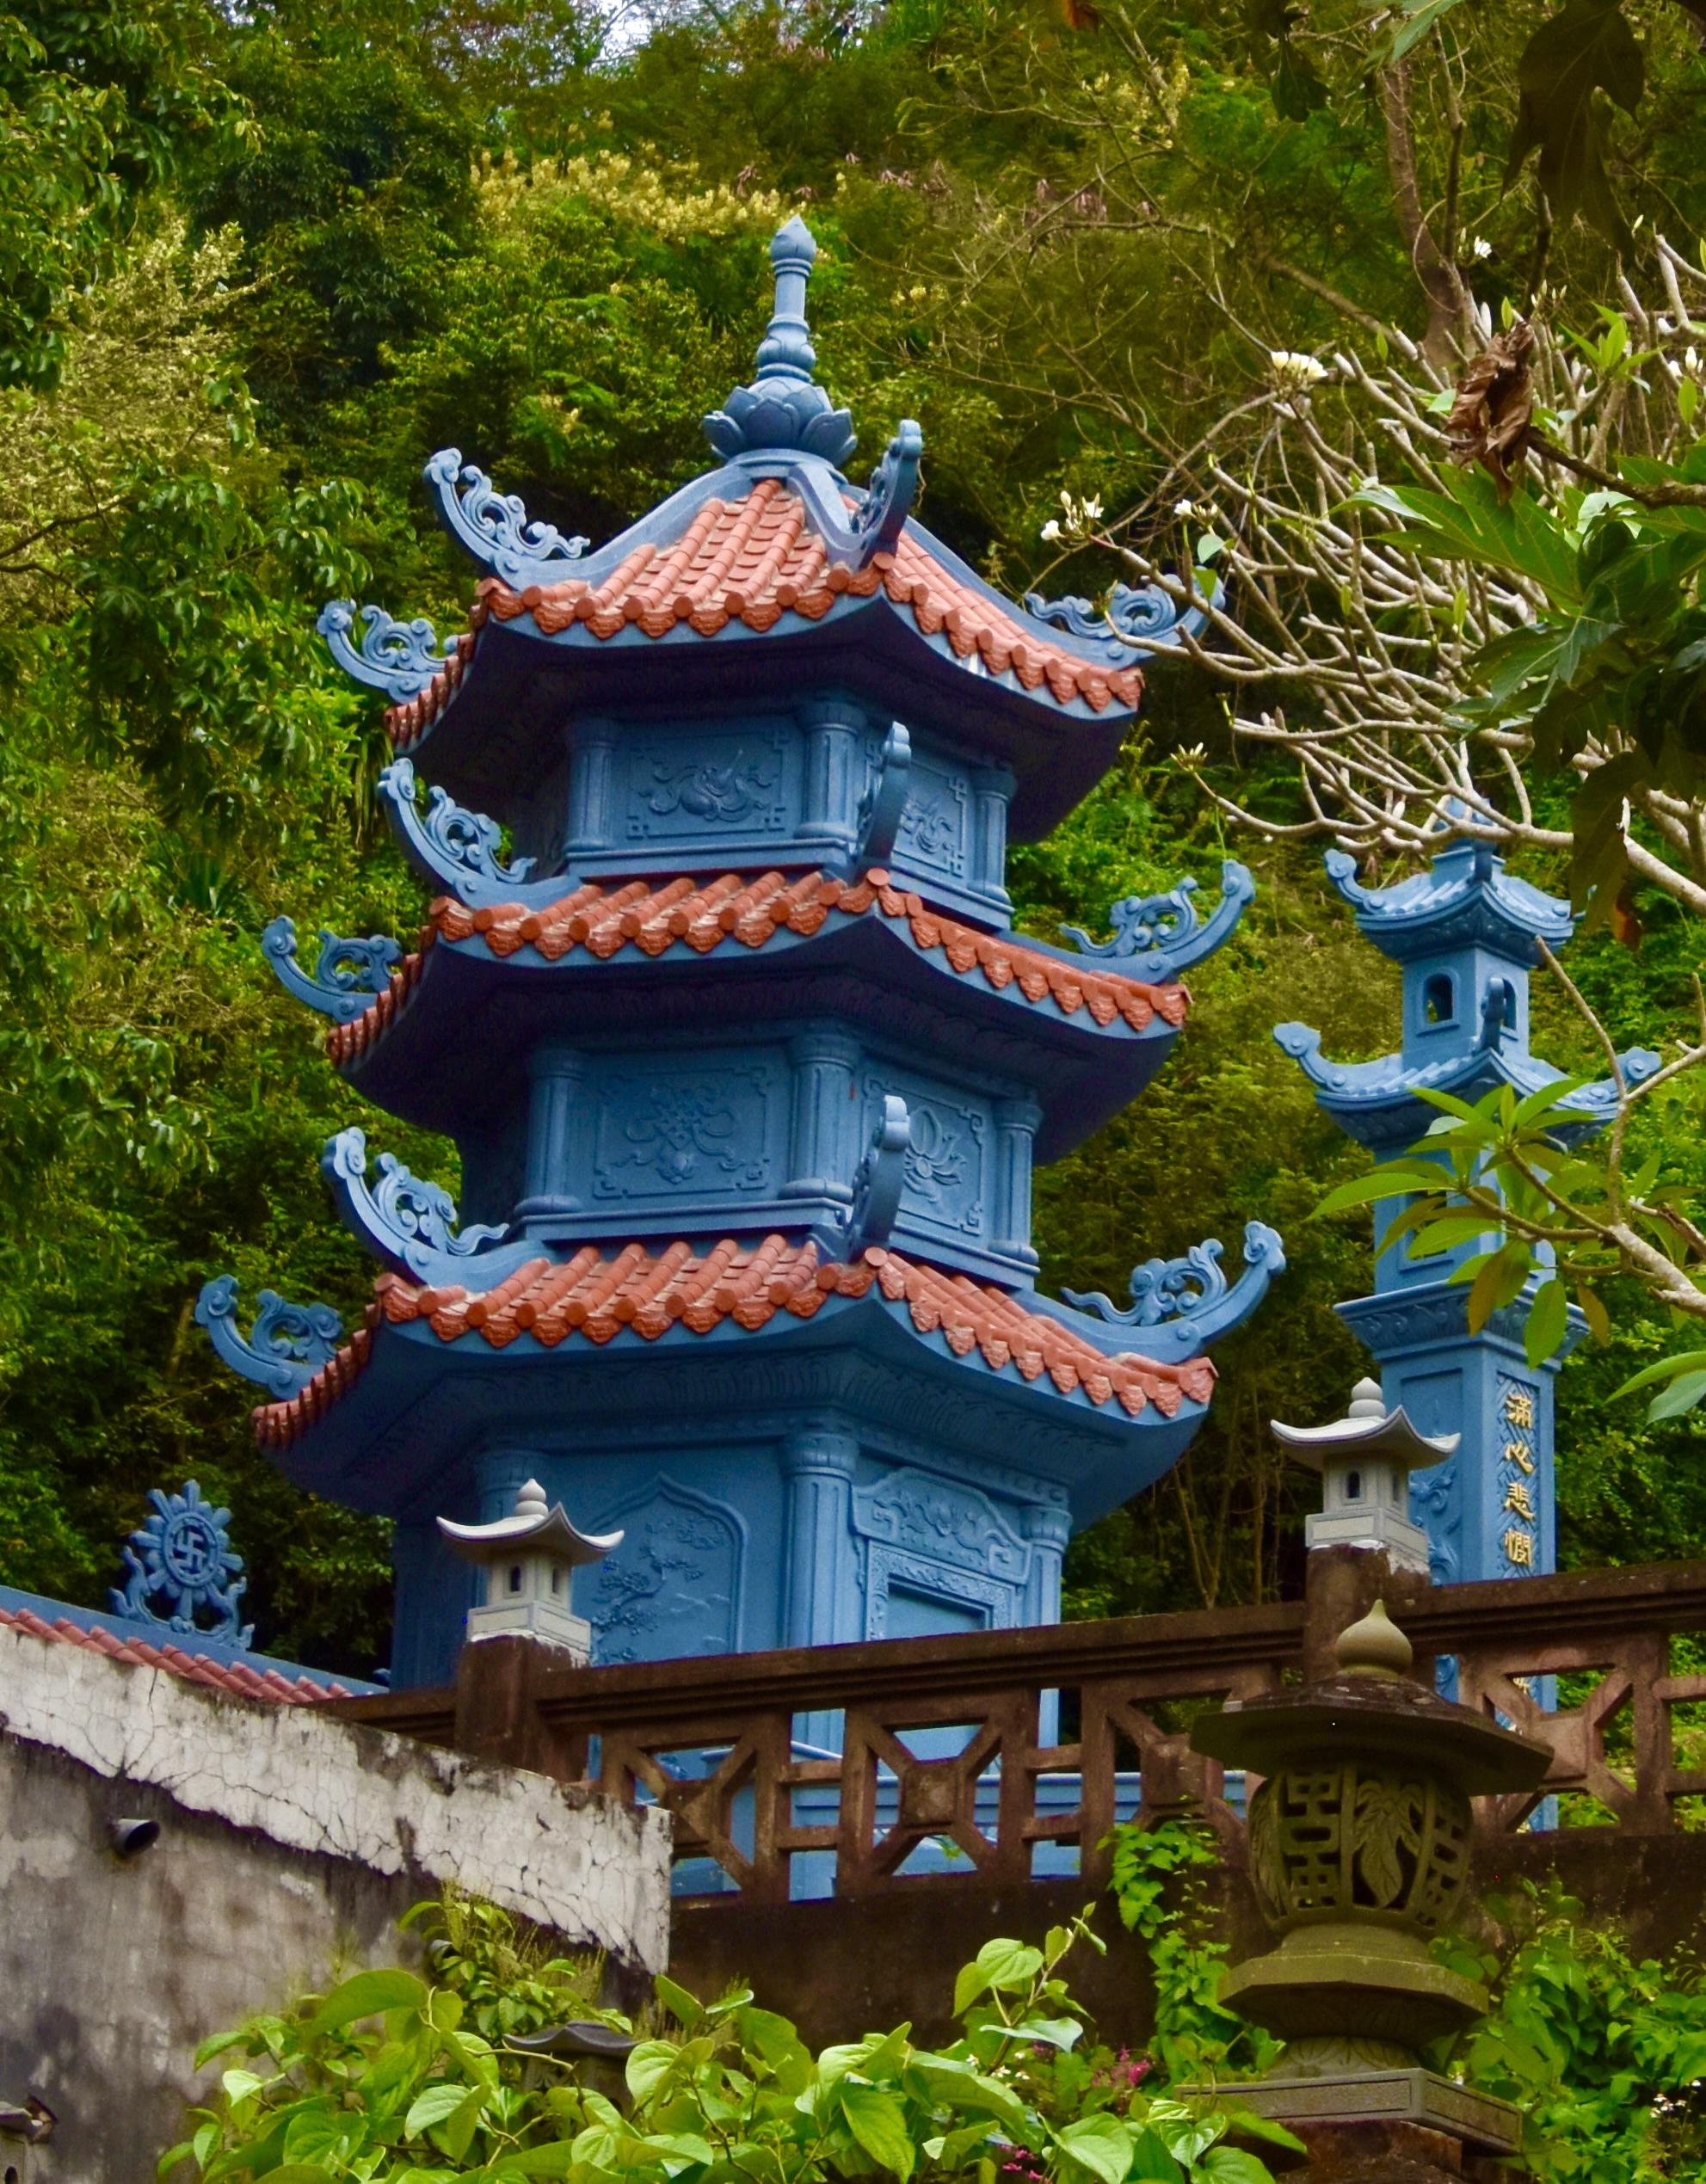 The Blue Pagoda of Thuy Son, Da Nang